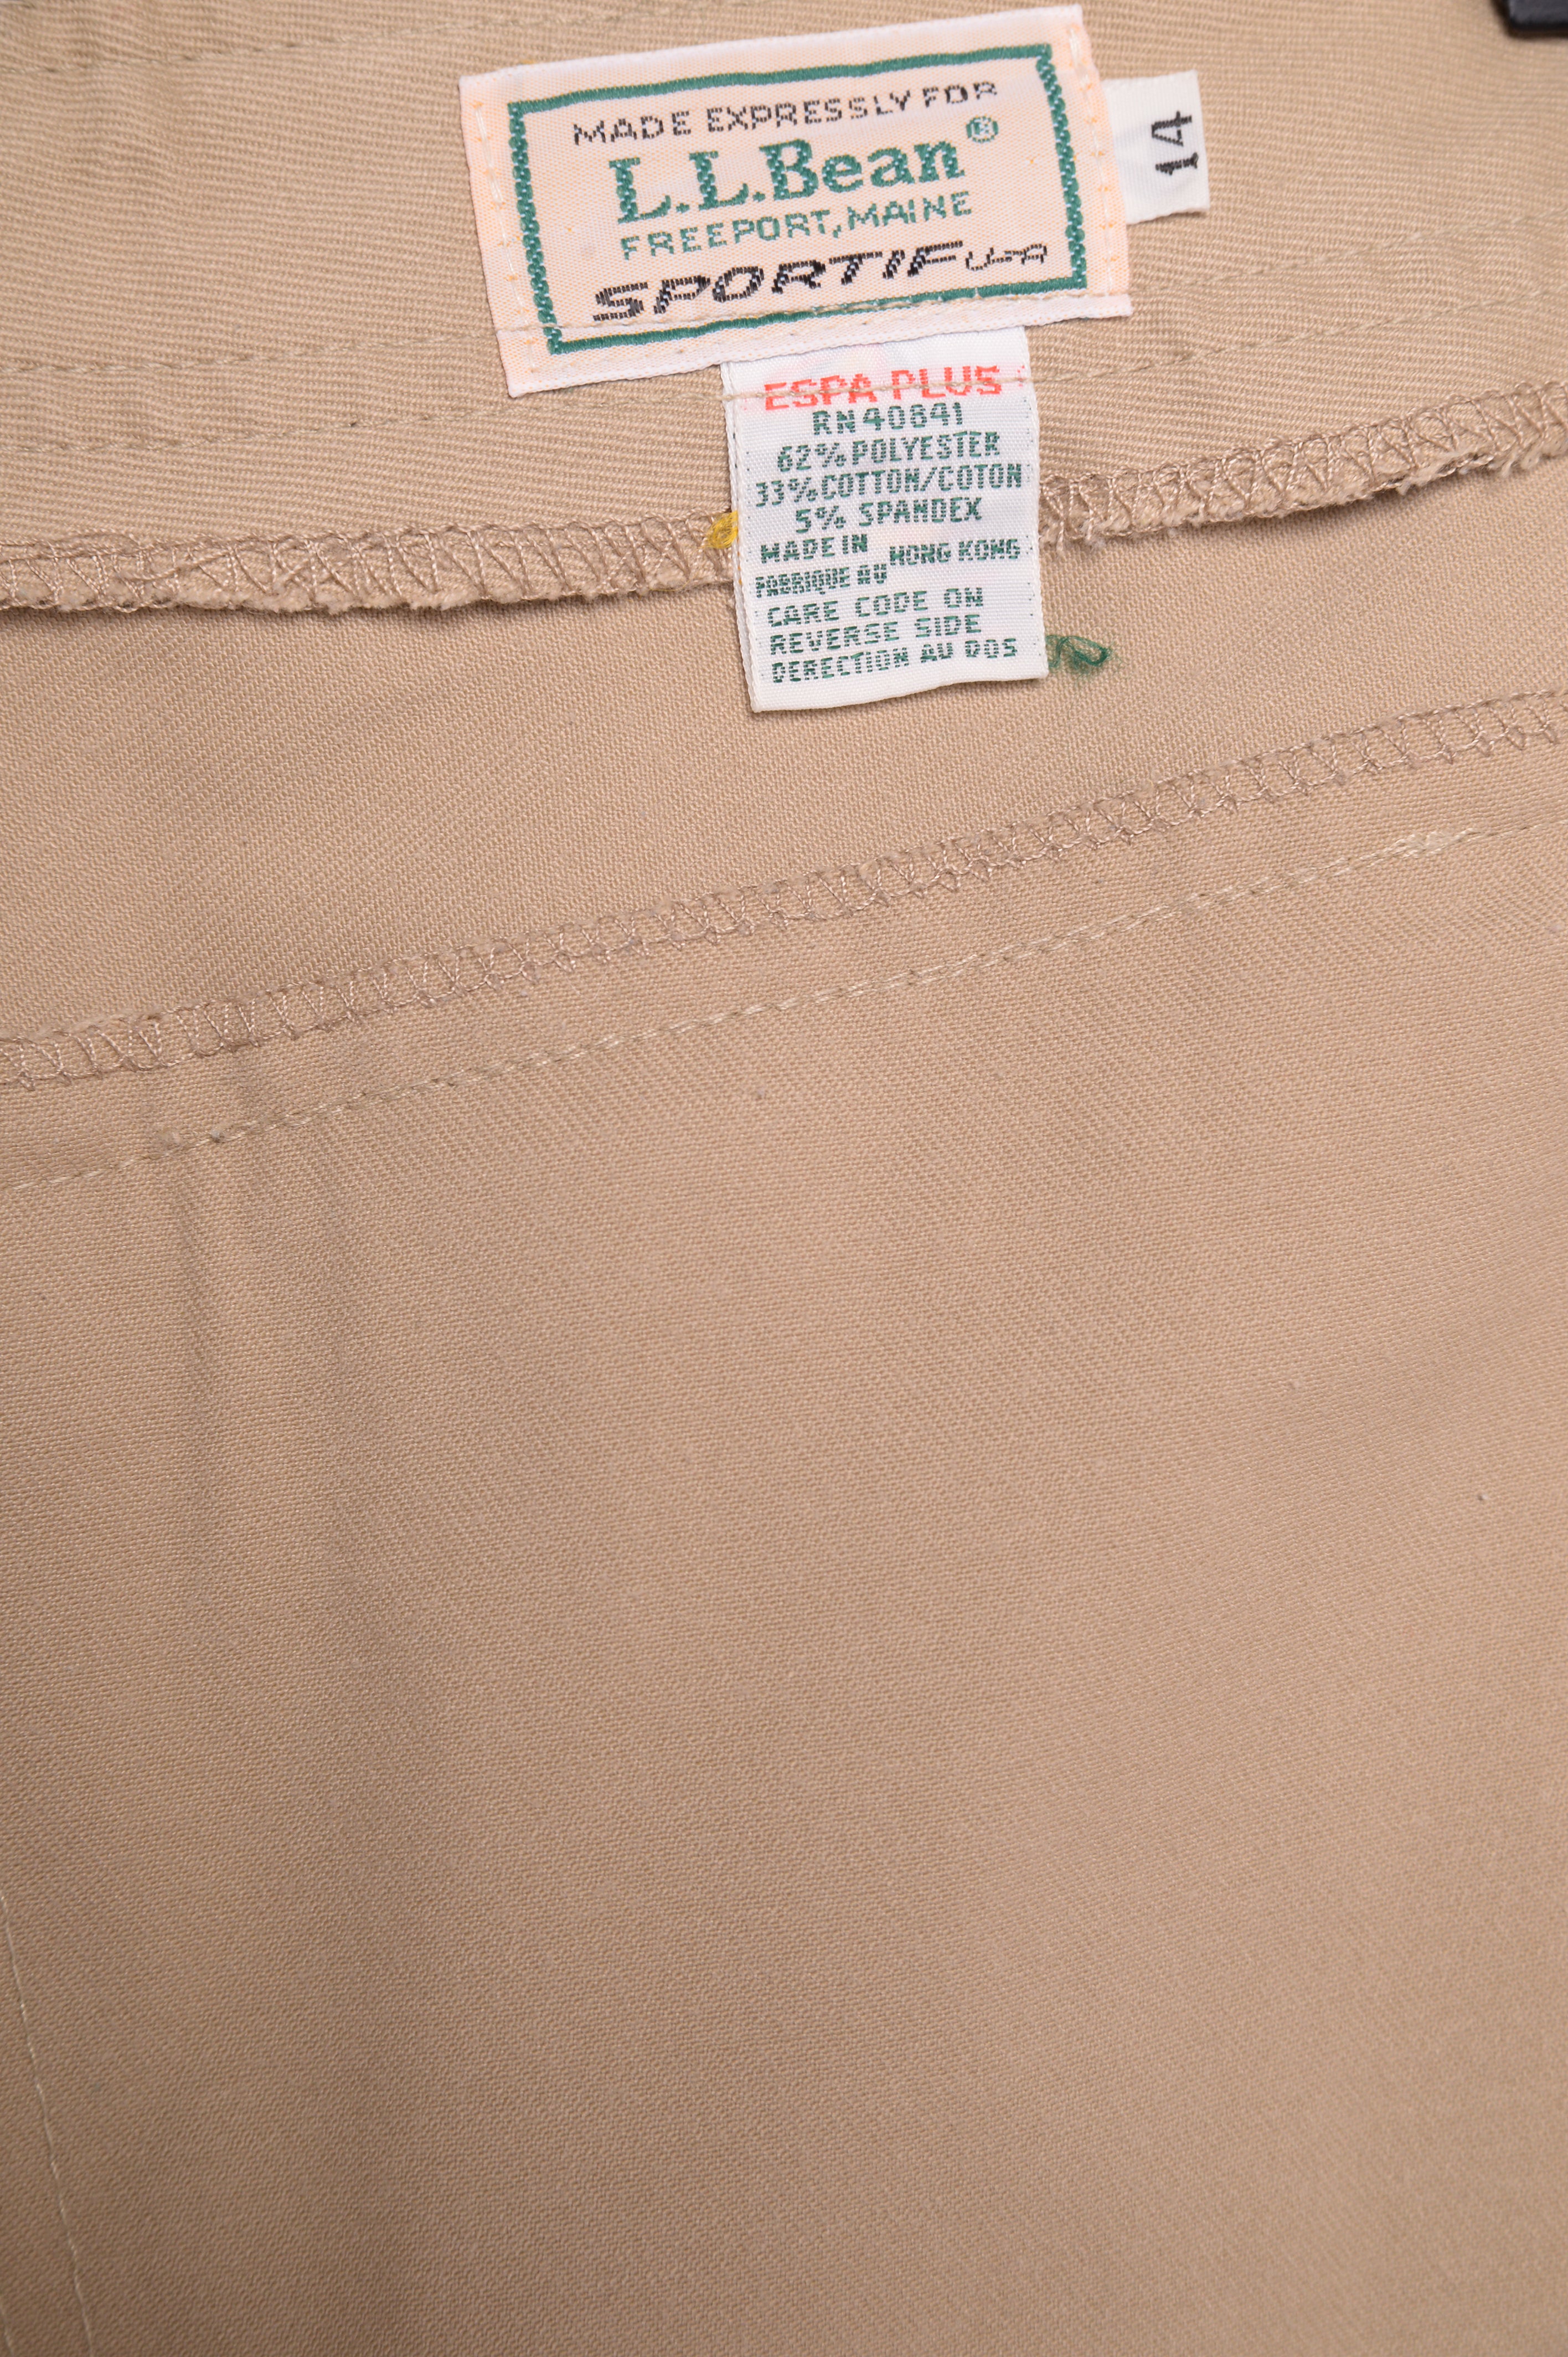 Vintage 1980's L.L Bean Fleece Lined Workwear Chino Khaki Pants